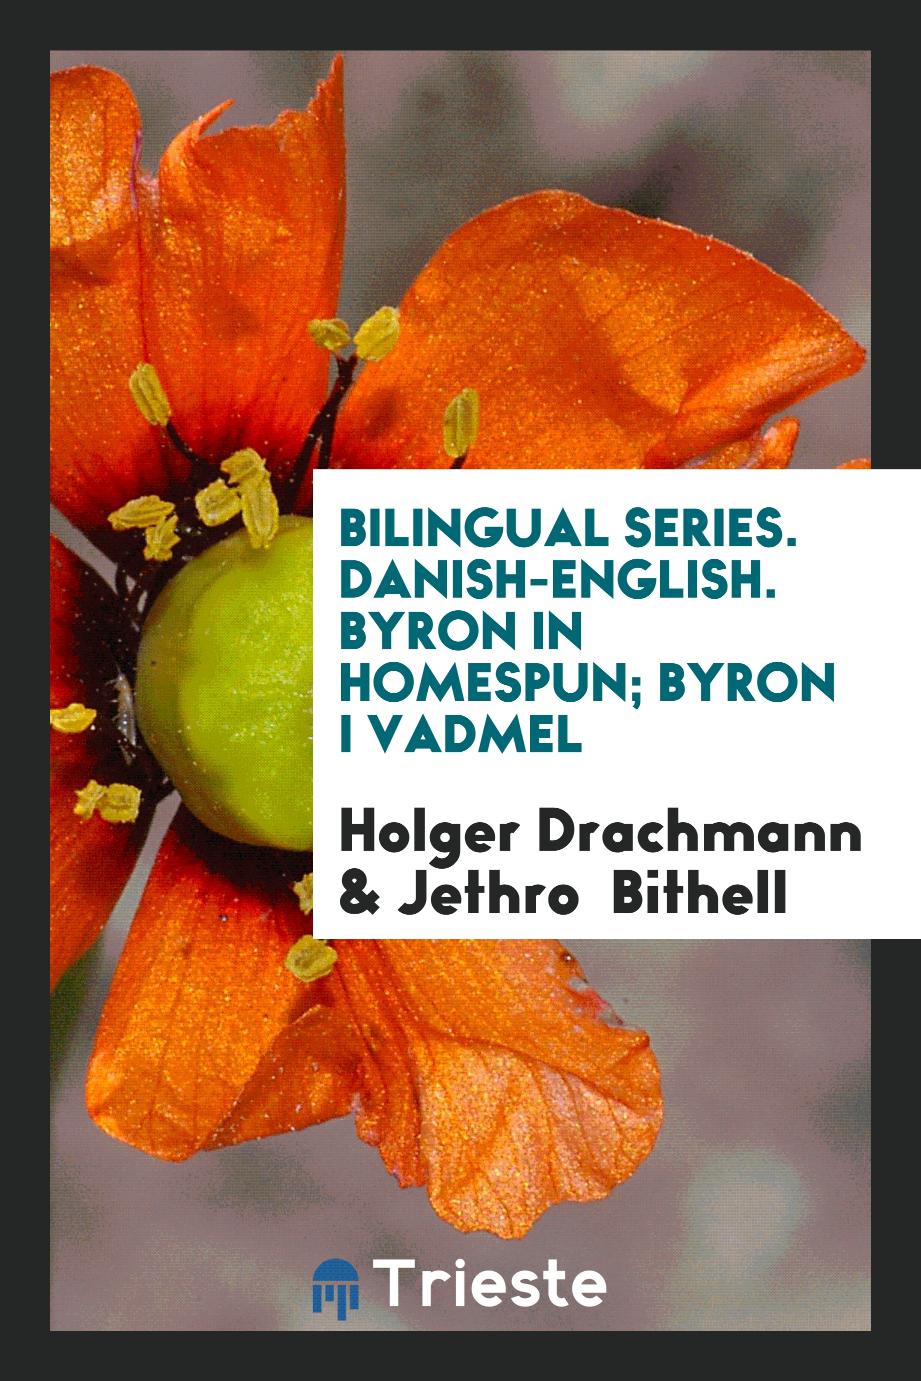 Holger Drachmann, Jethro Bithell - Bilingual series. Danish-English. Byron in homespun; Byron i vadmel